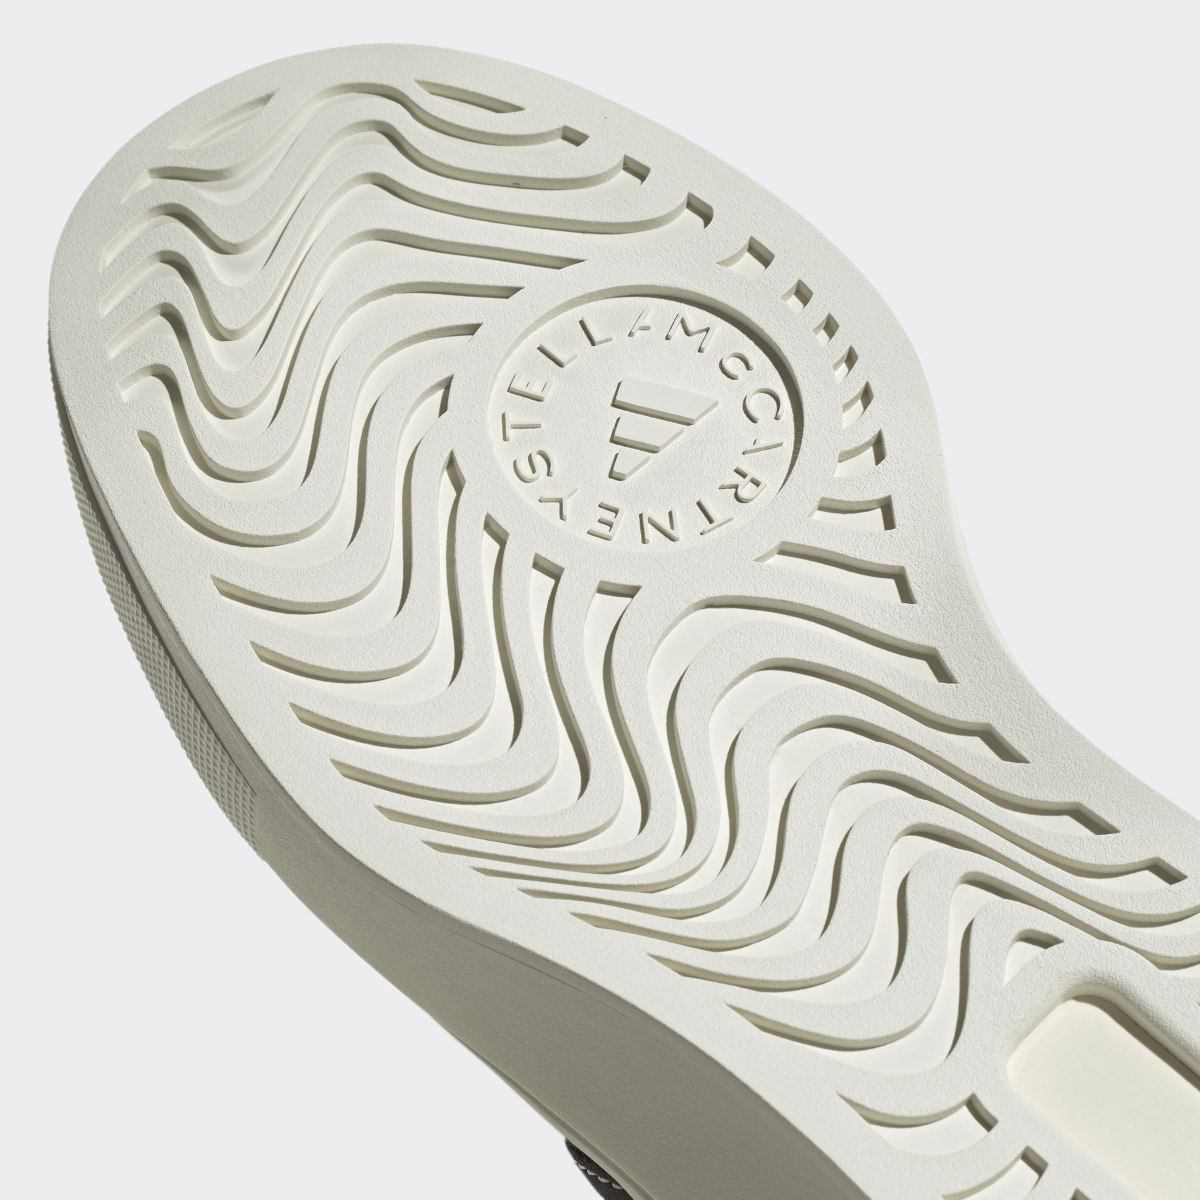 Adidas Chaussure slip-on adidas by Stella McCartney Court. 10